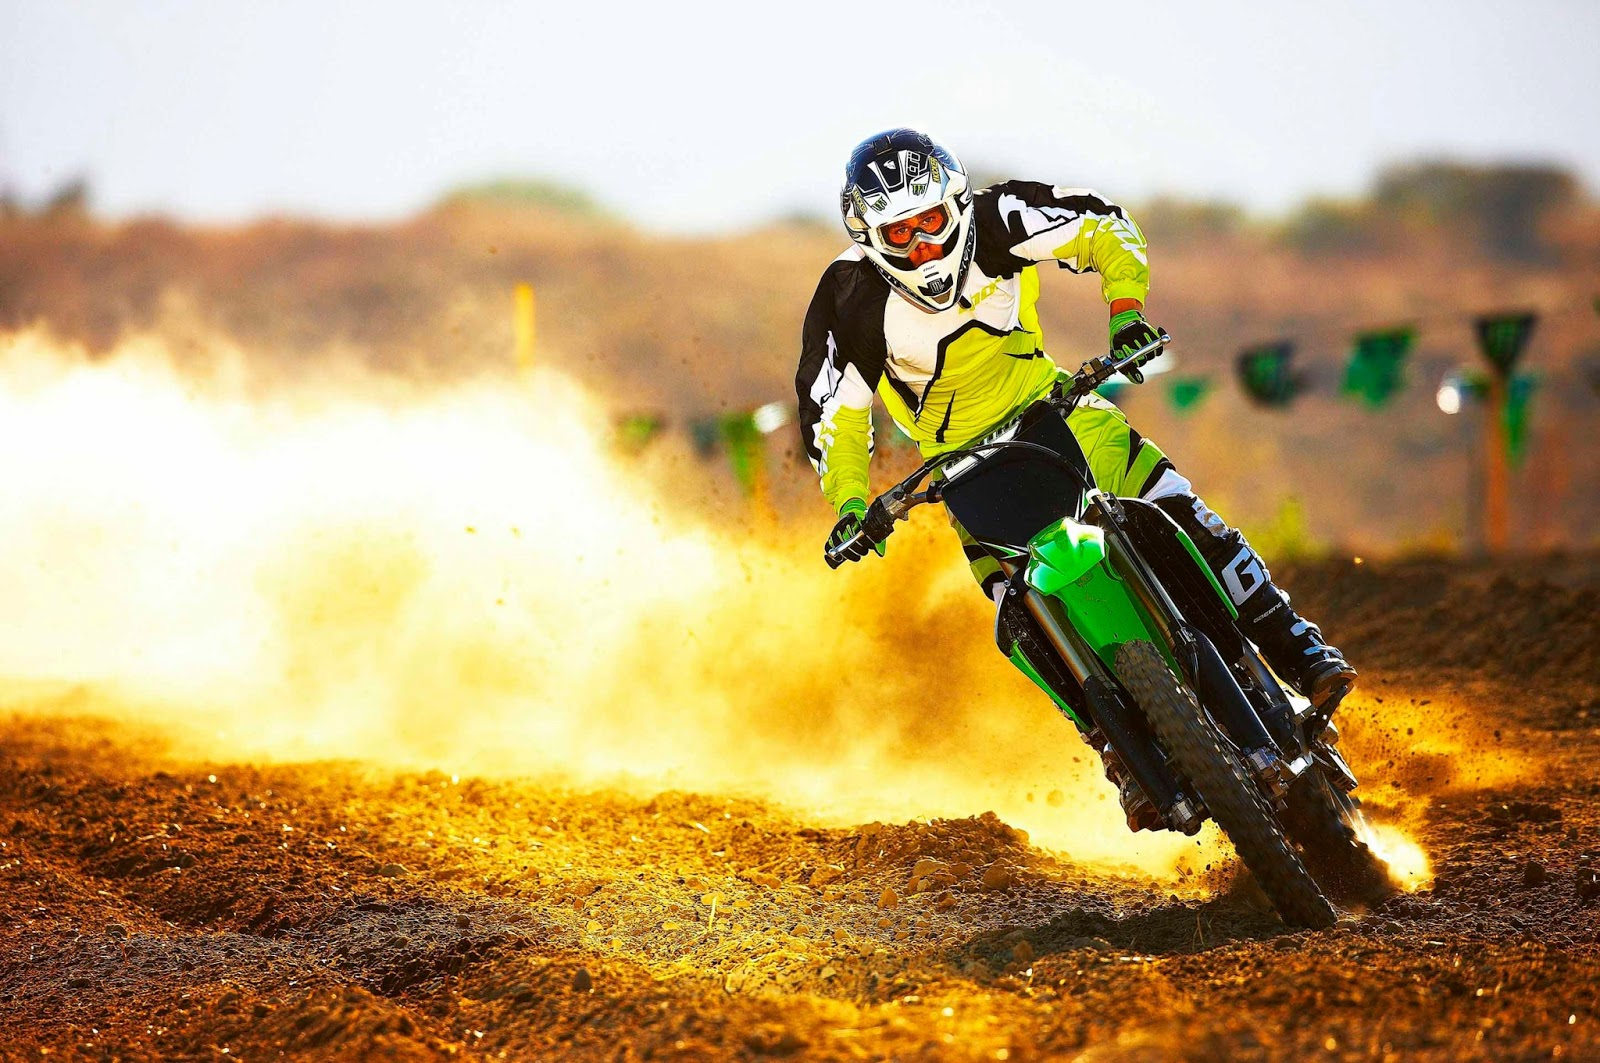 Dirt Bike Motorcycle  Free photo on Pixabay  Pixabay